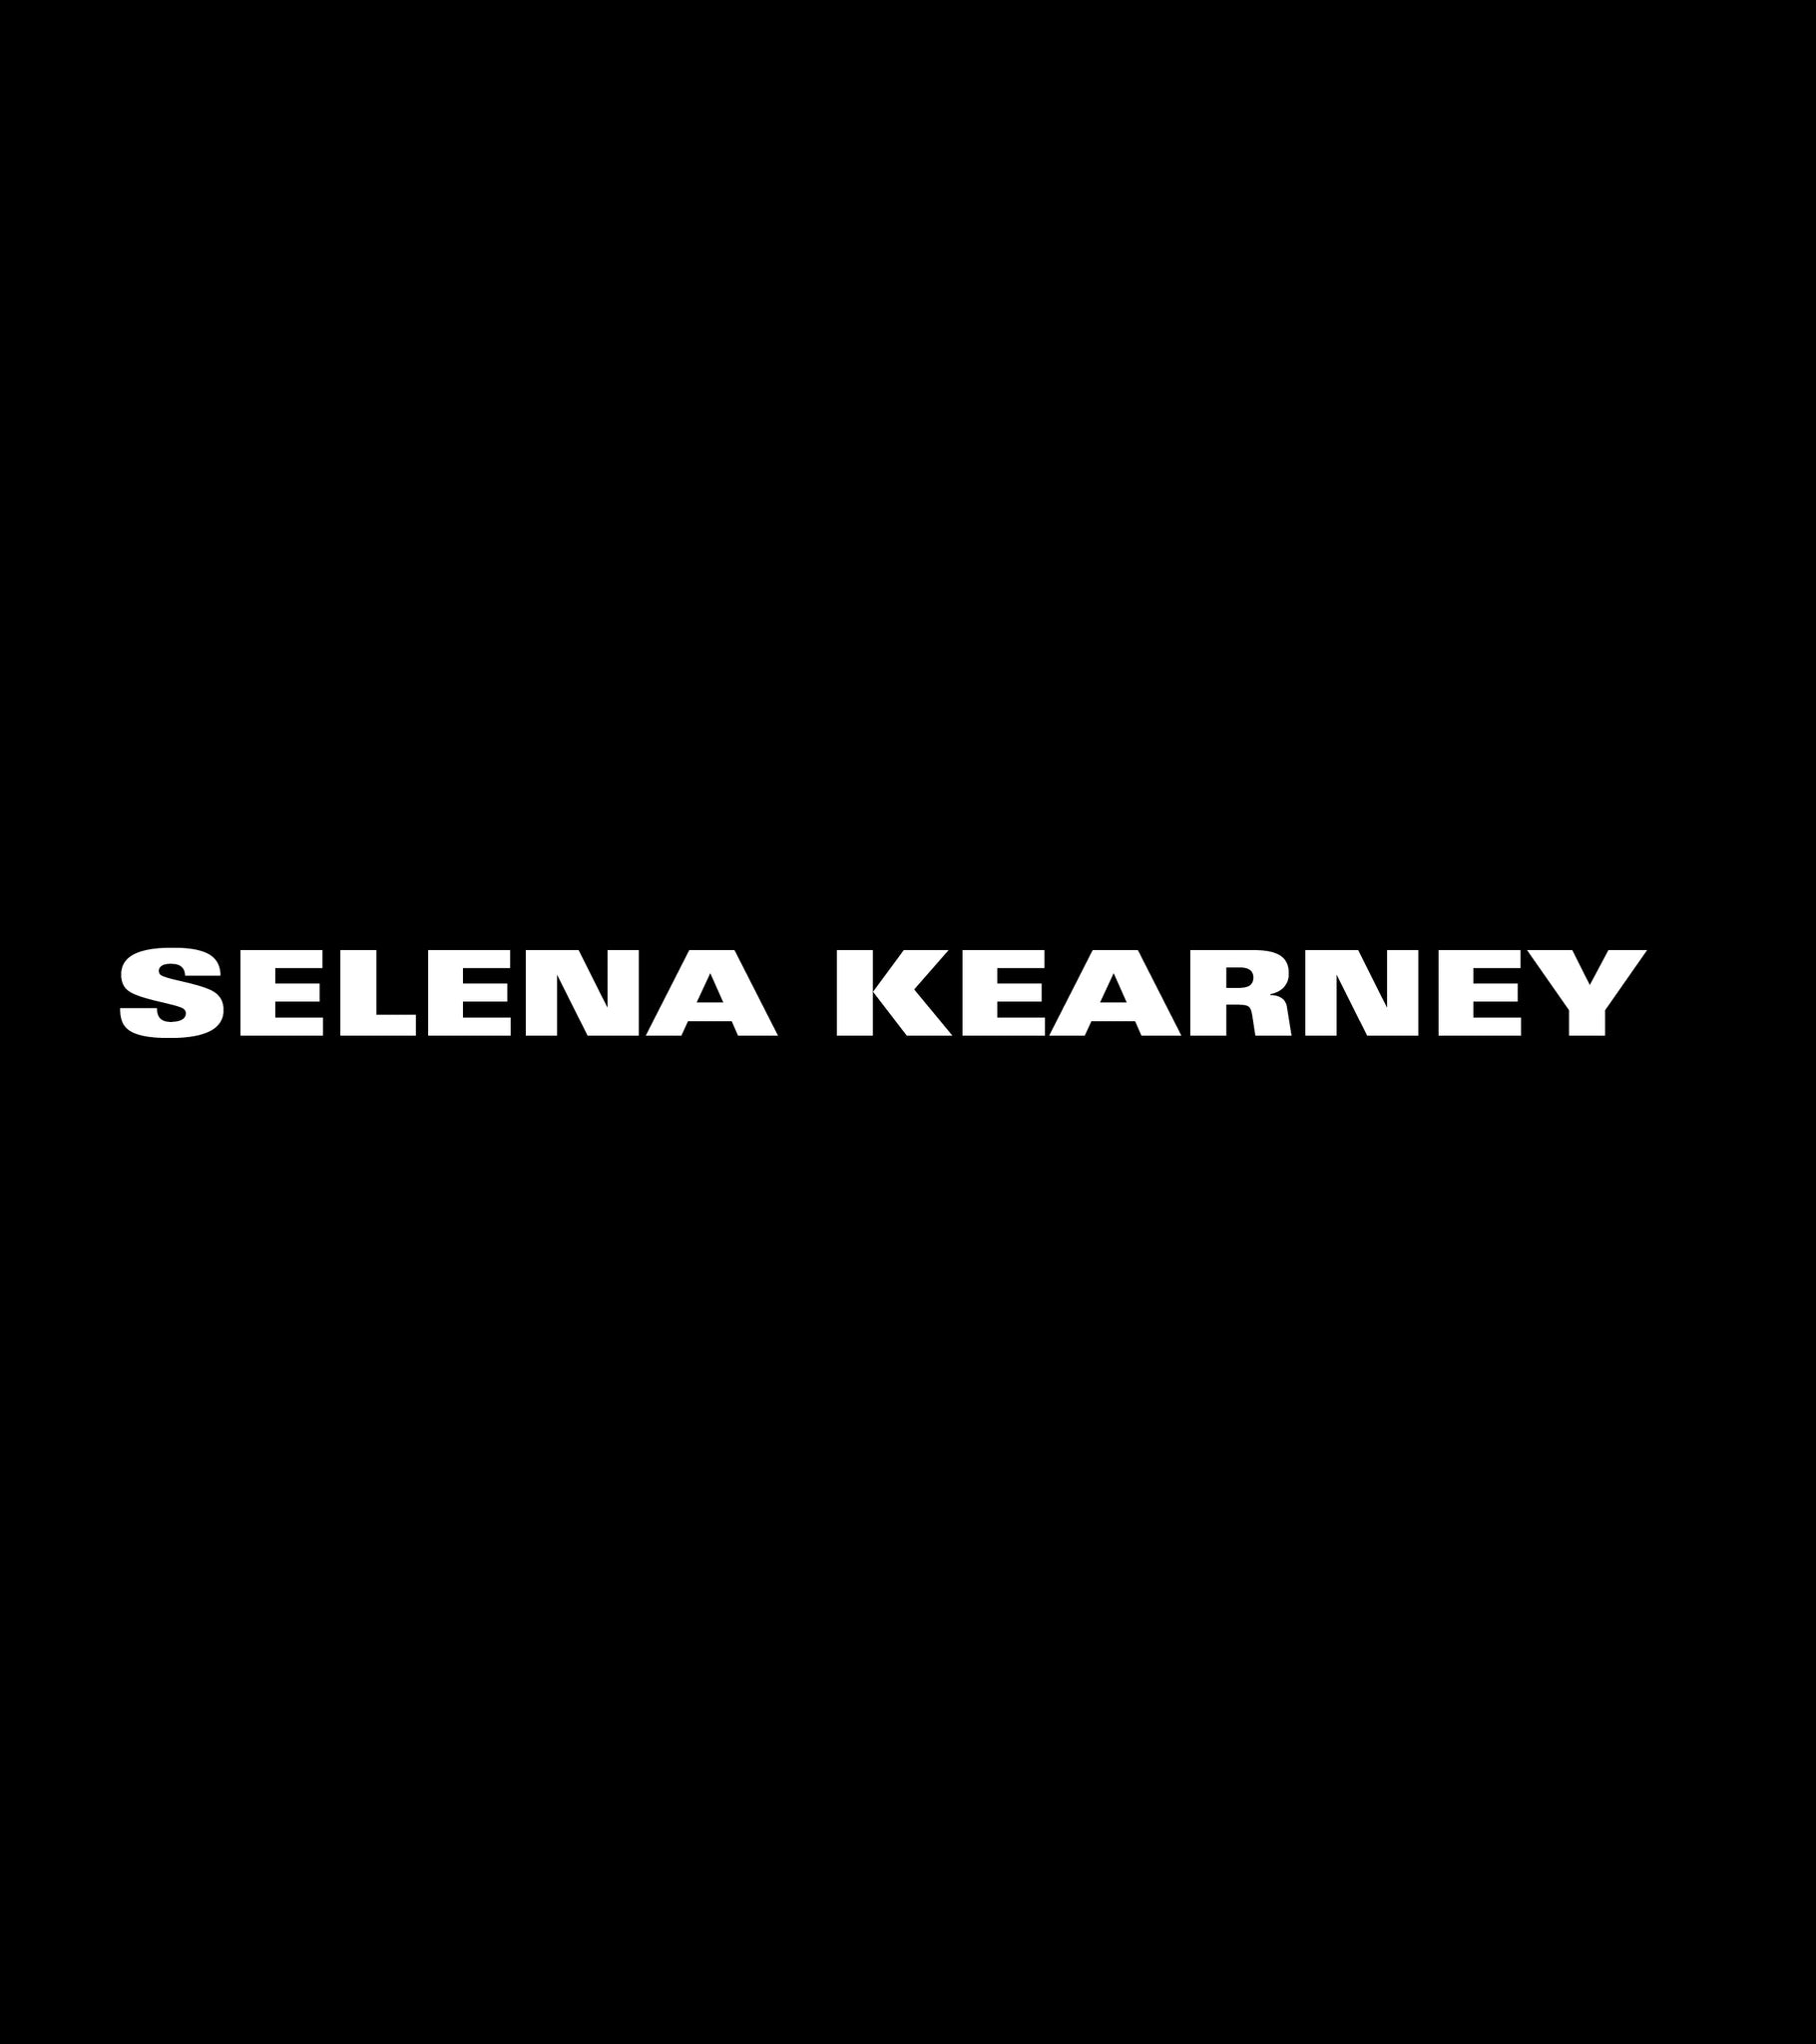 Every Object Has A Ritual by Selena Kearney